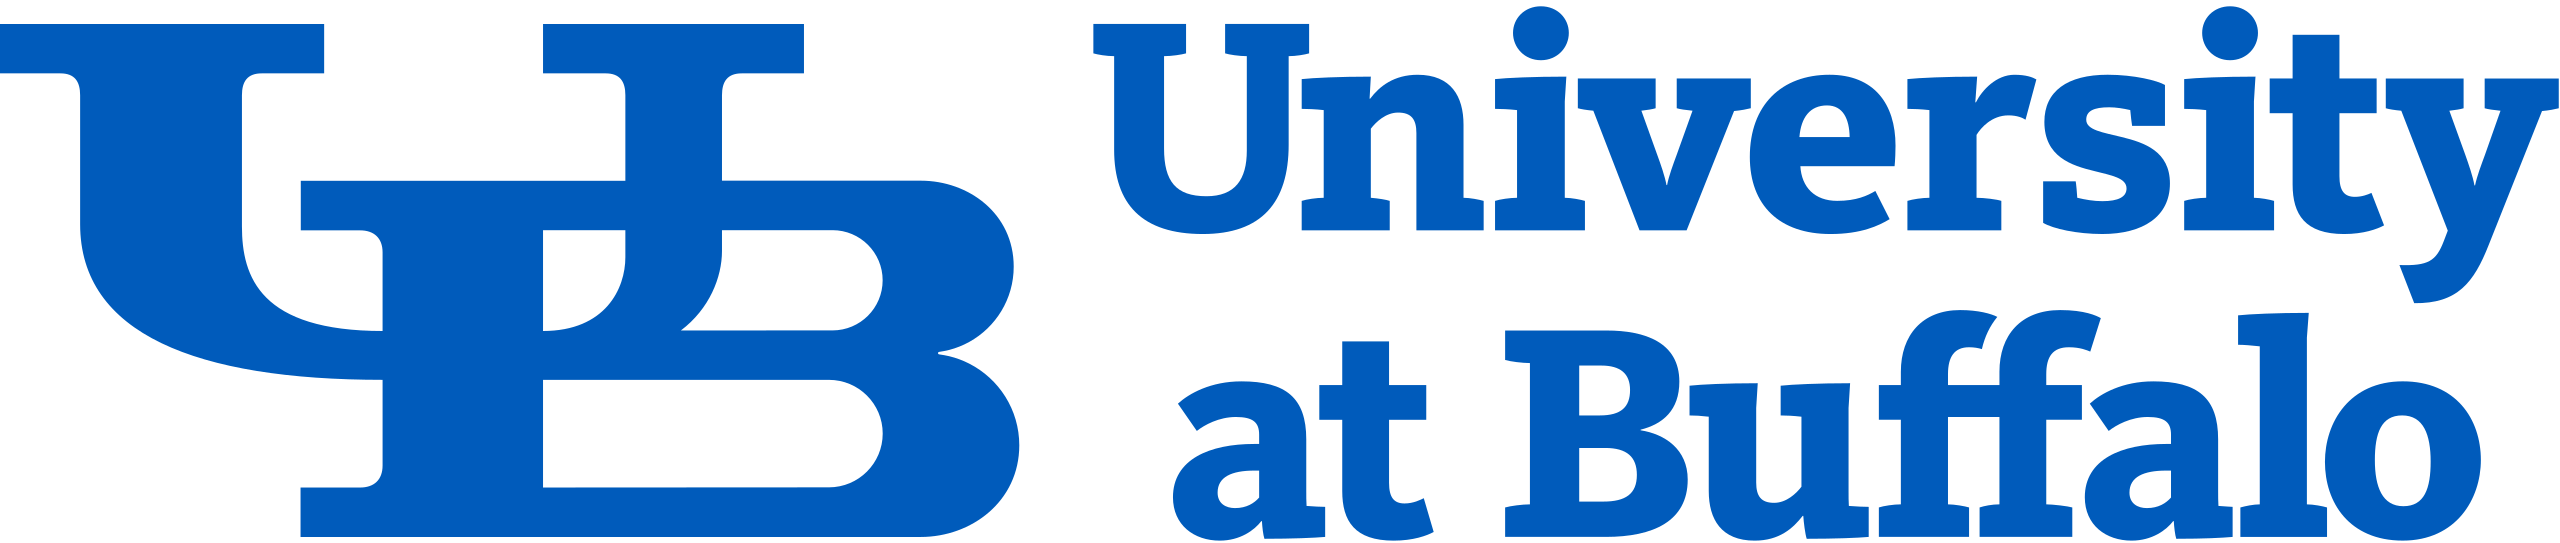 university at buffalo logo